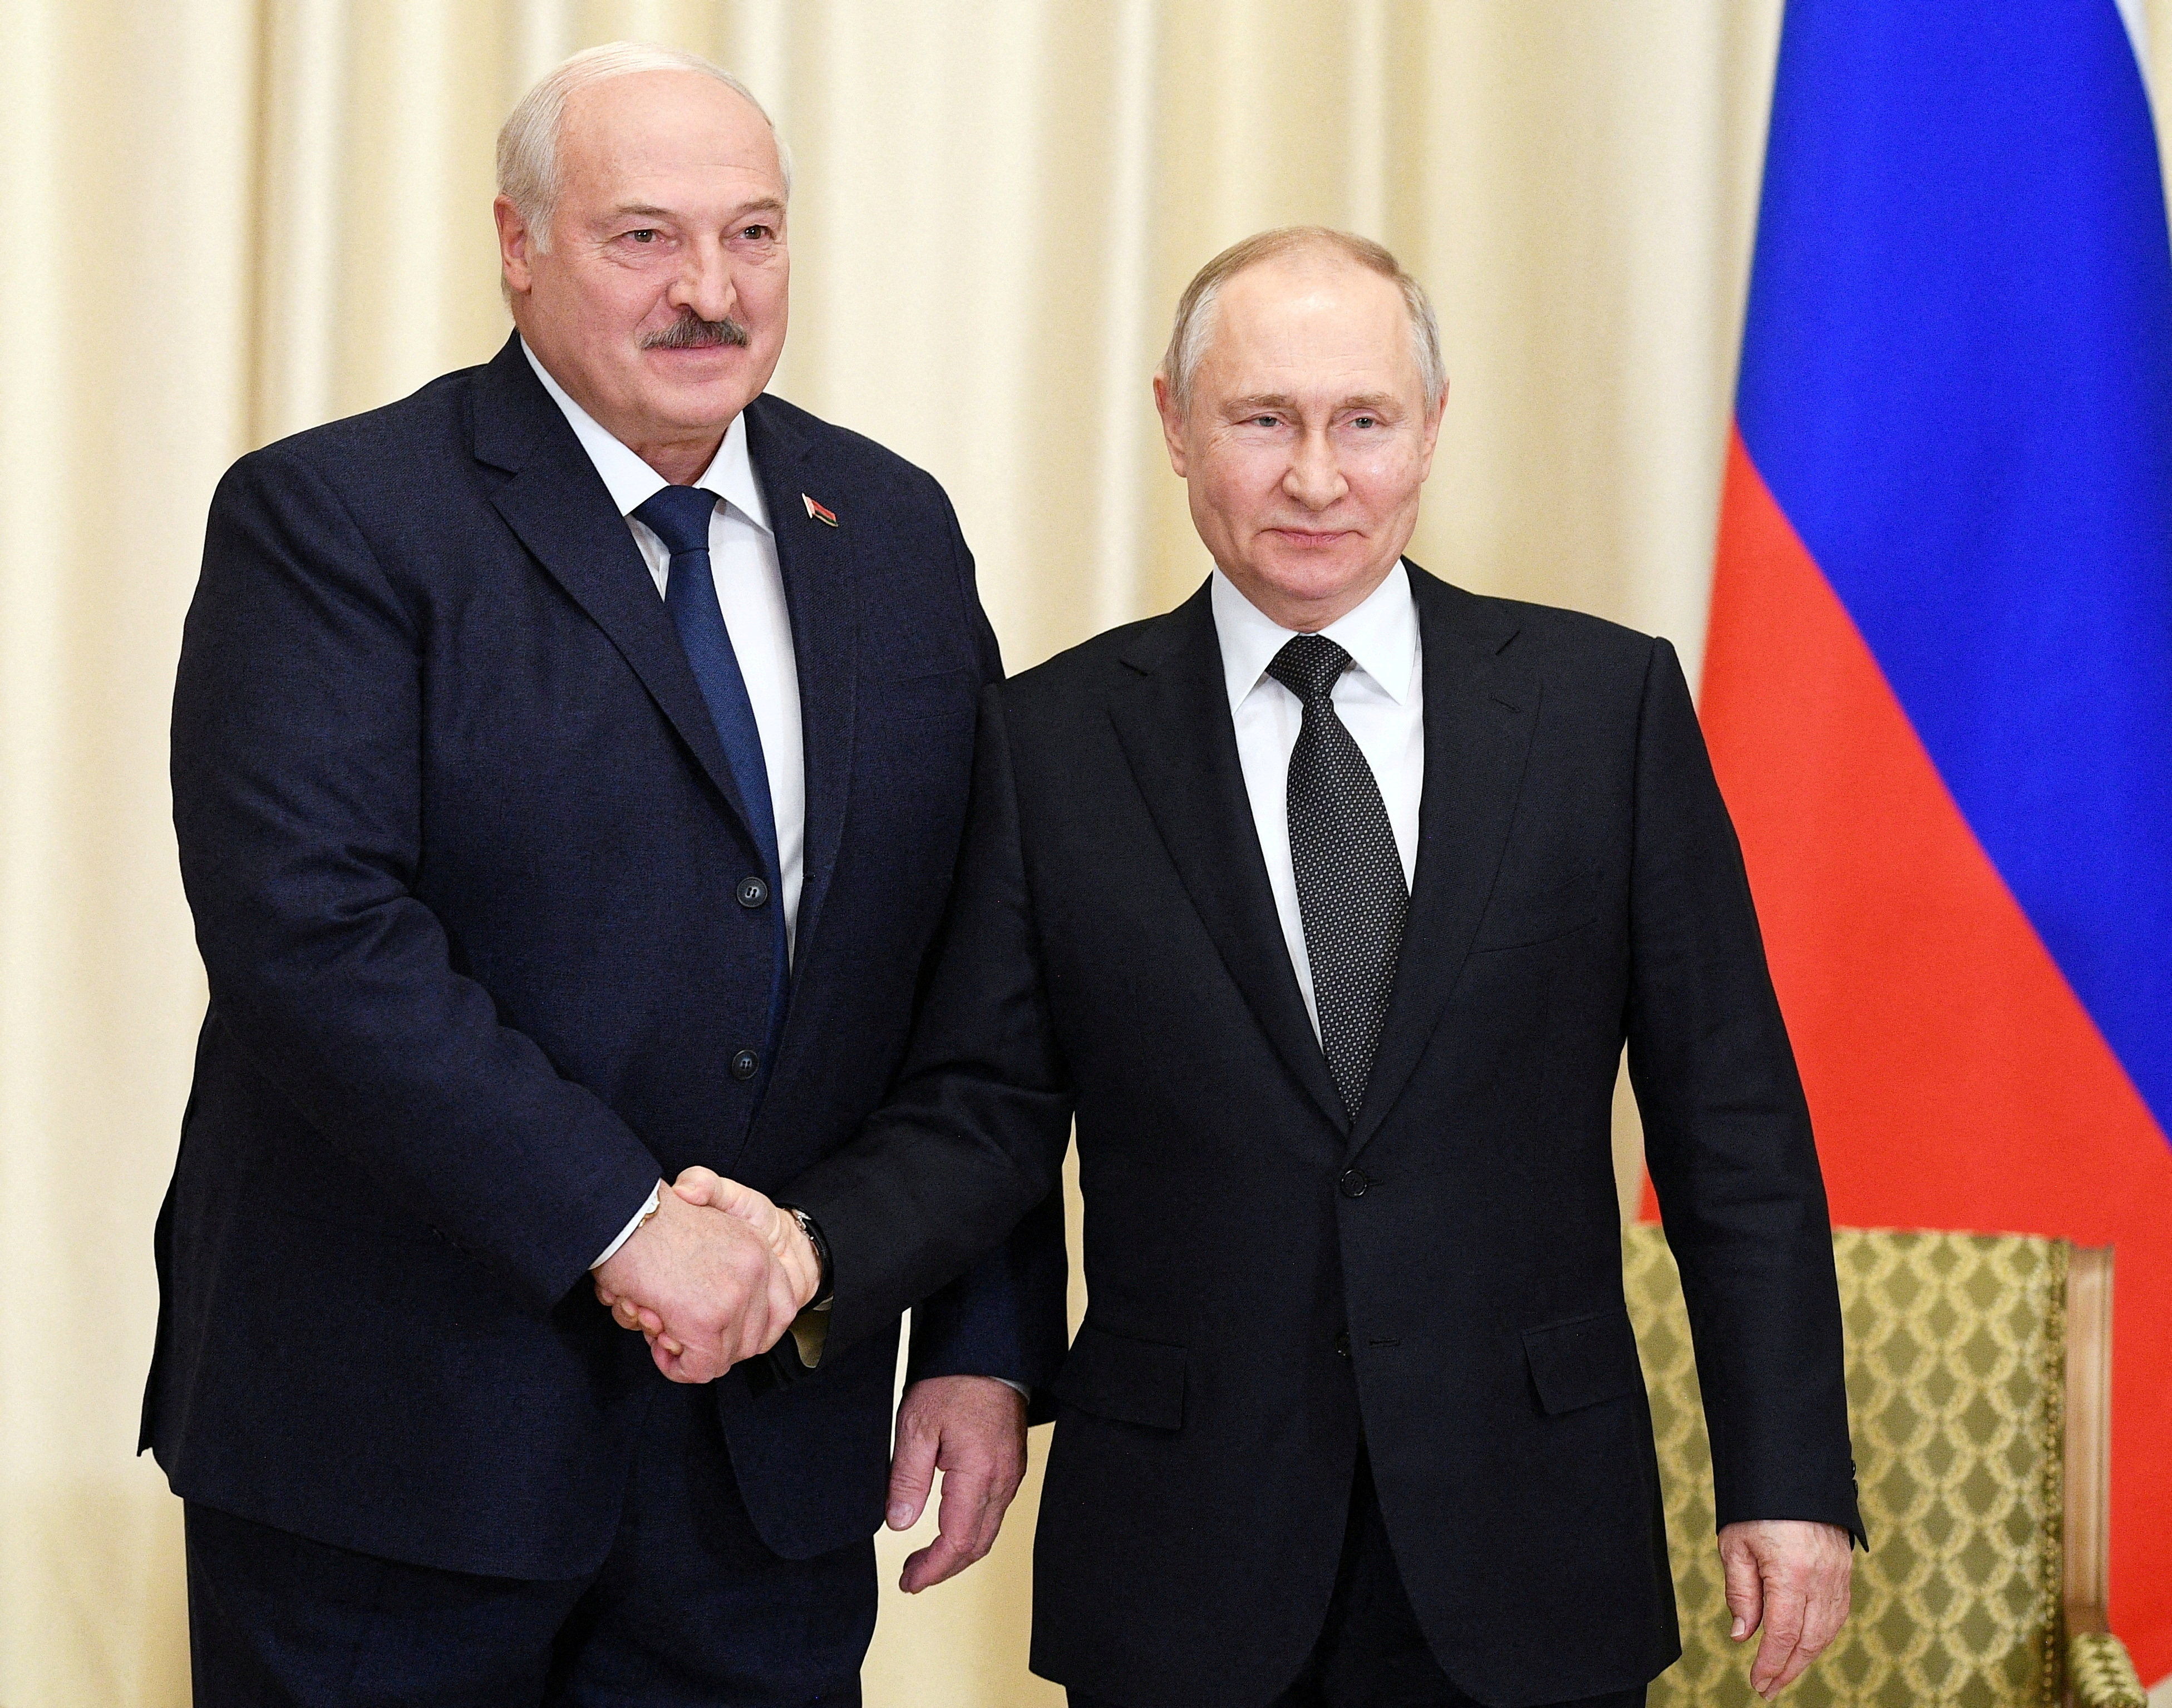 Russian President Vladimir Putin, right, shakes hands with Belarusian President Alexander Lukashenko near Moscow, Russia on February 17. Photo: Sputnik / Vladimir Astapkovich / Kremlin via Reuters